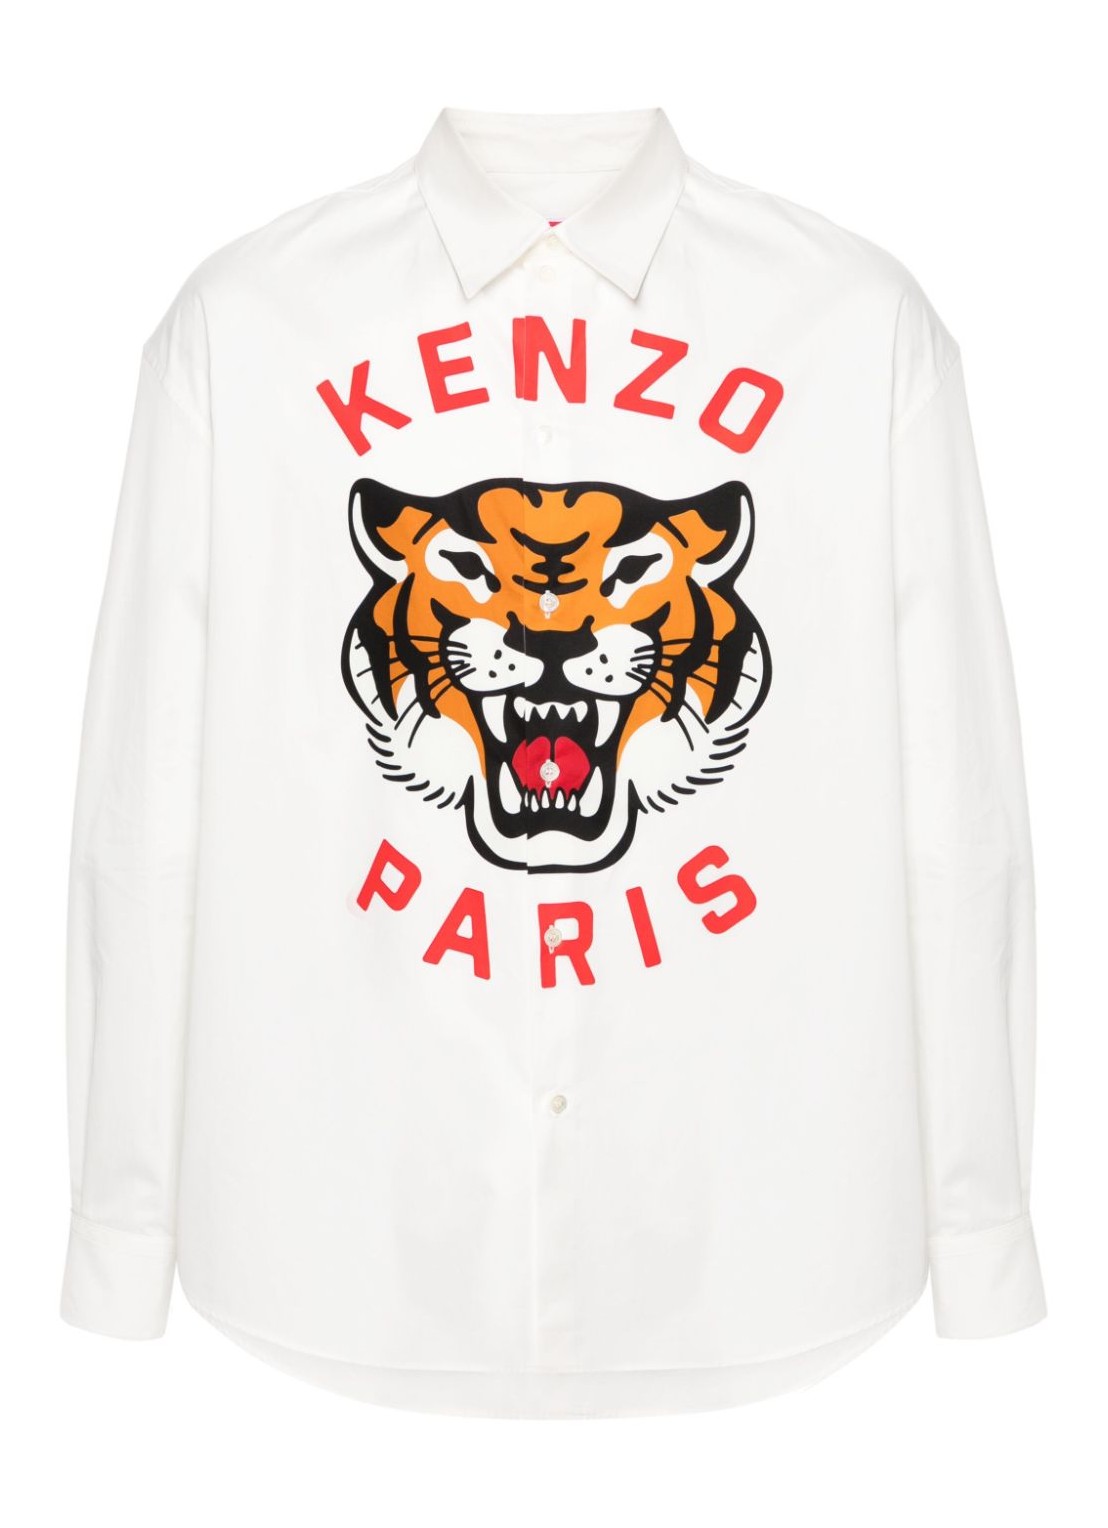 Camiseria kenzo shirt man kenzo lucky tiger shirt fe55ch4209p7 01 talla 40
 